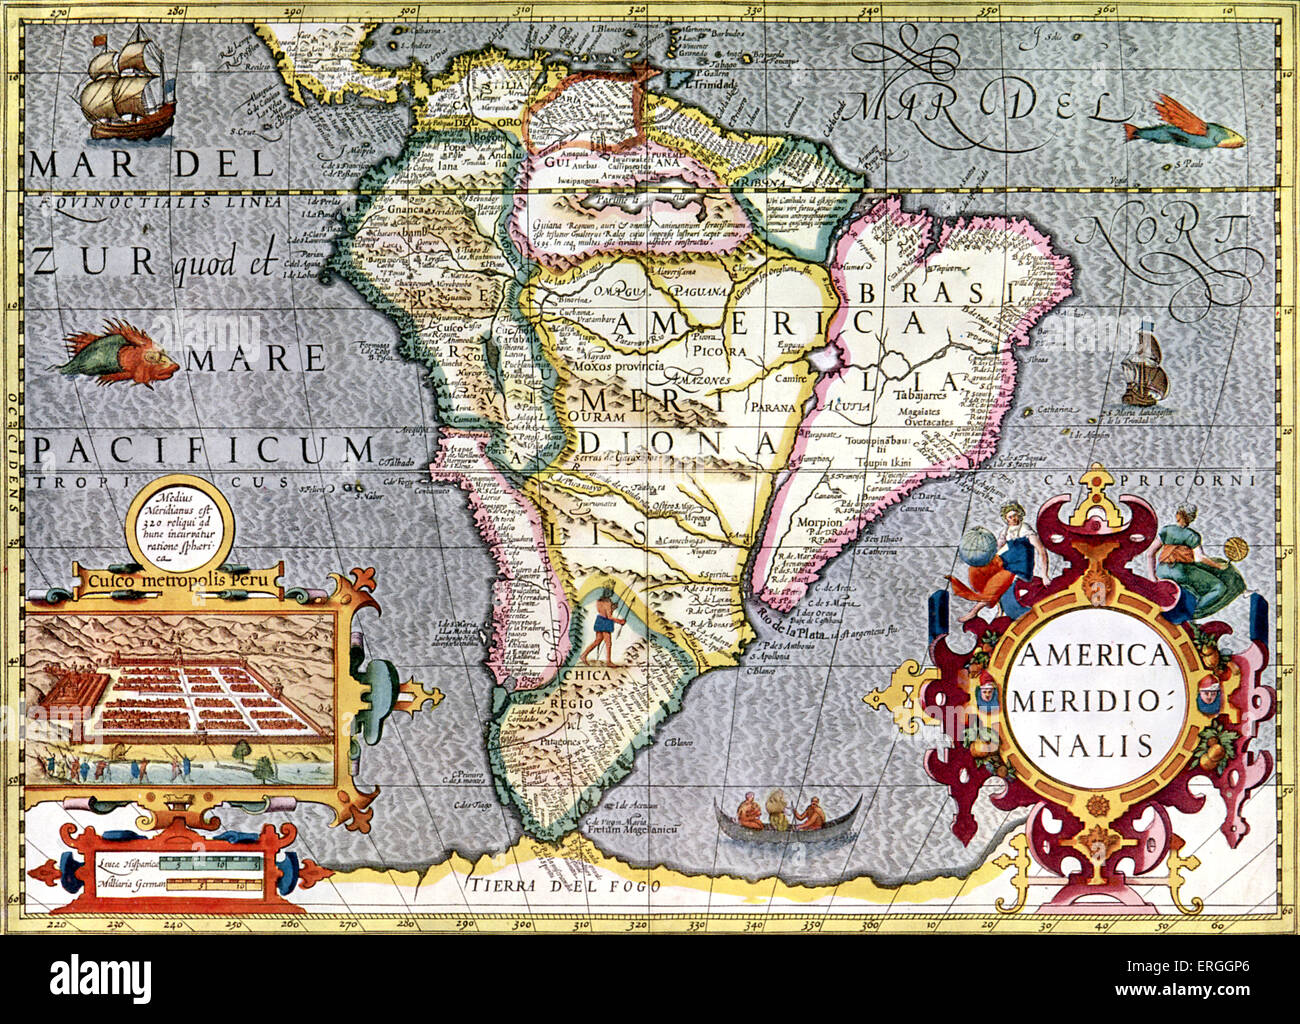 Map of South America published in Mercator's Atlas. Amsterdam, 1633. (Full title: 'Atlas, ou Représenation du Monde Universel Stock Photo